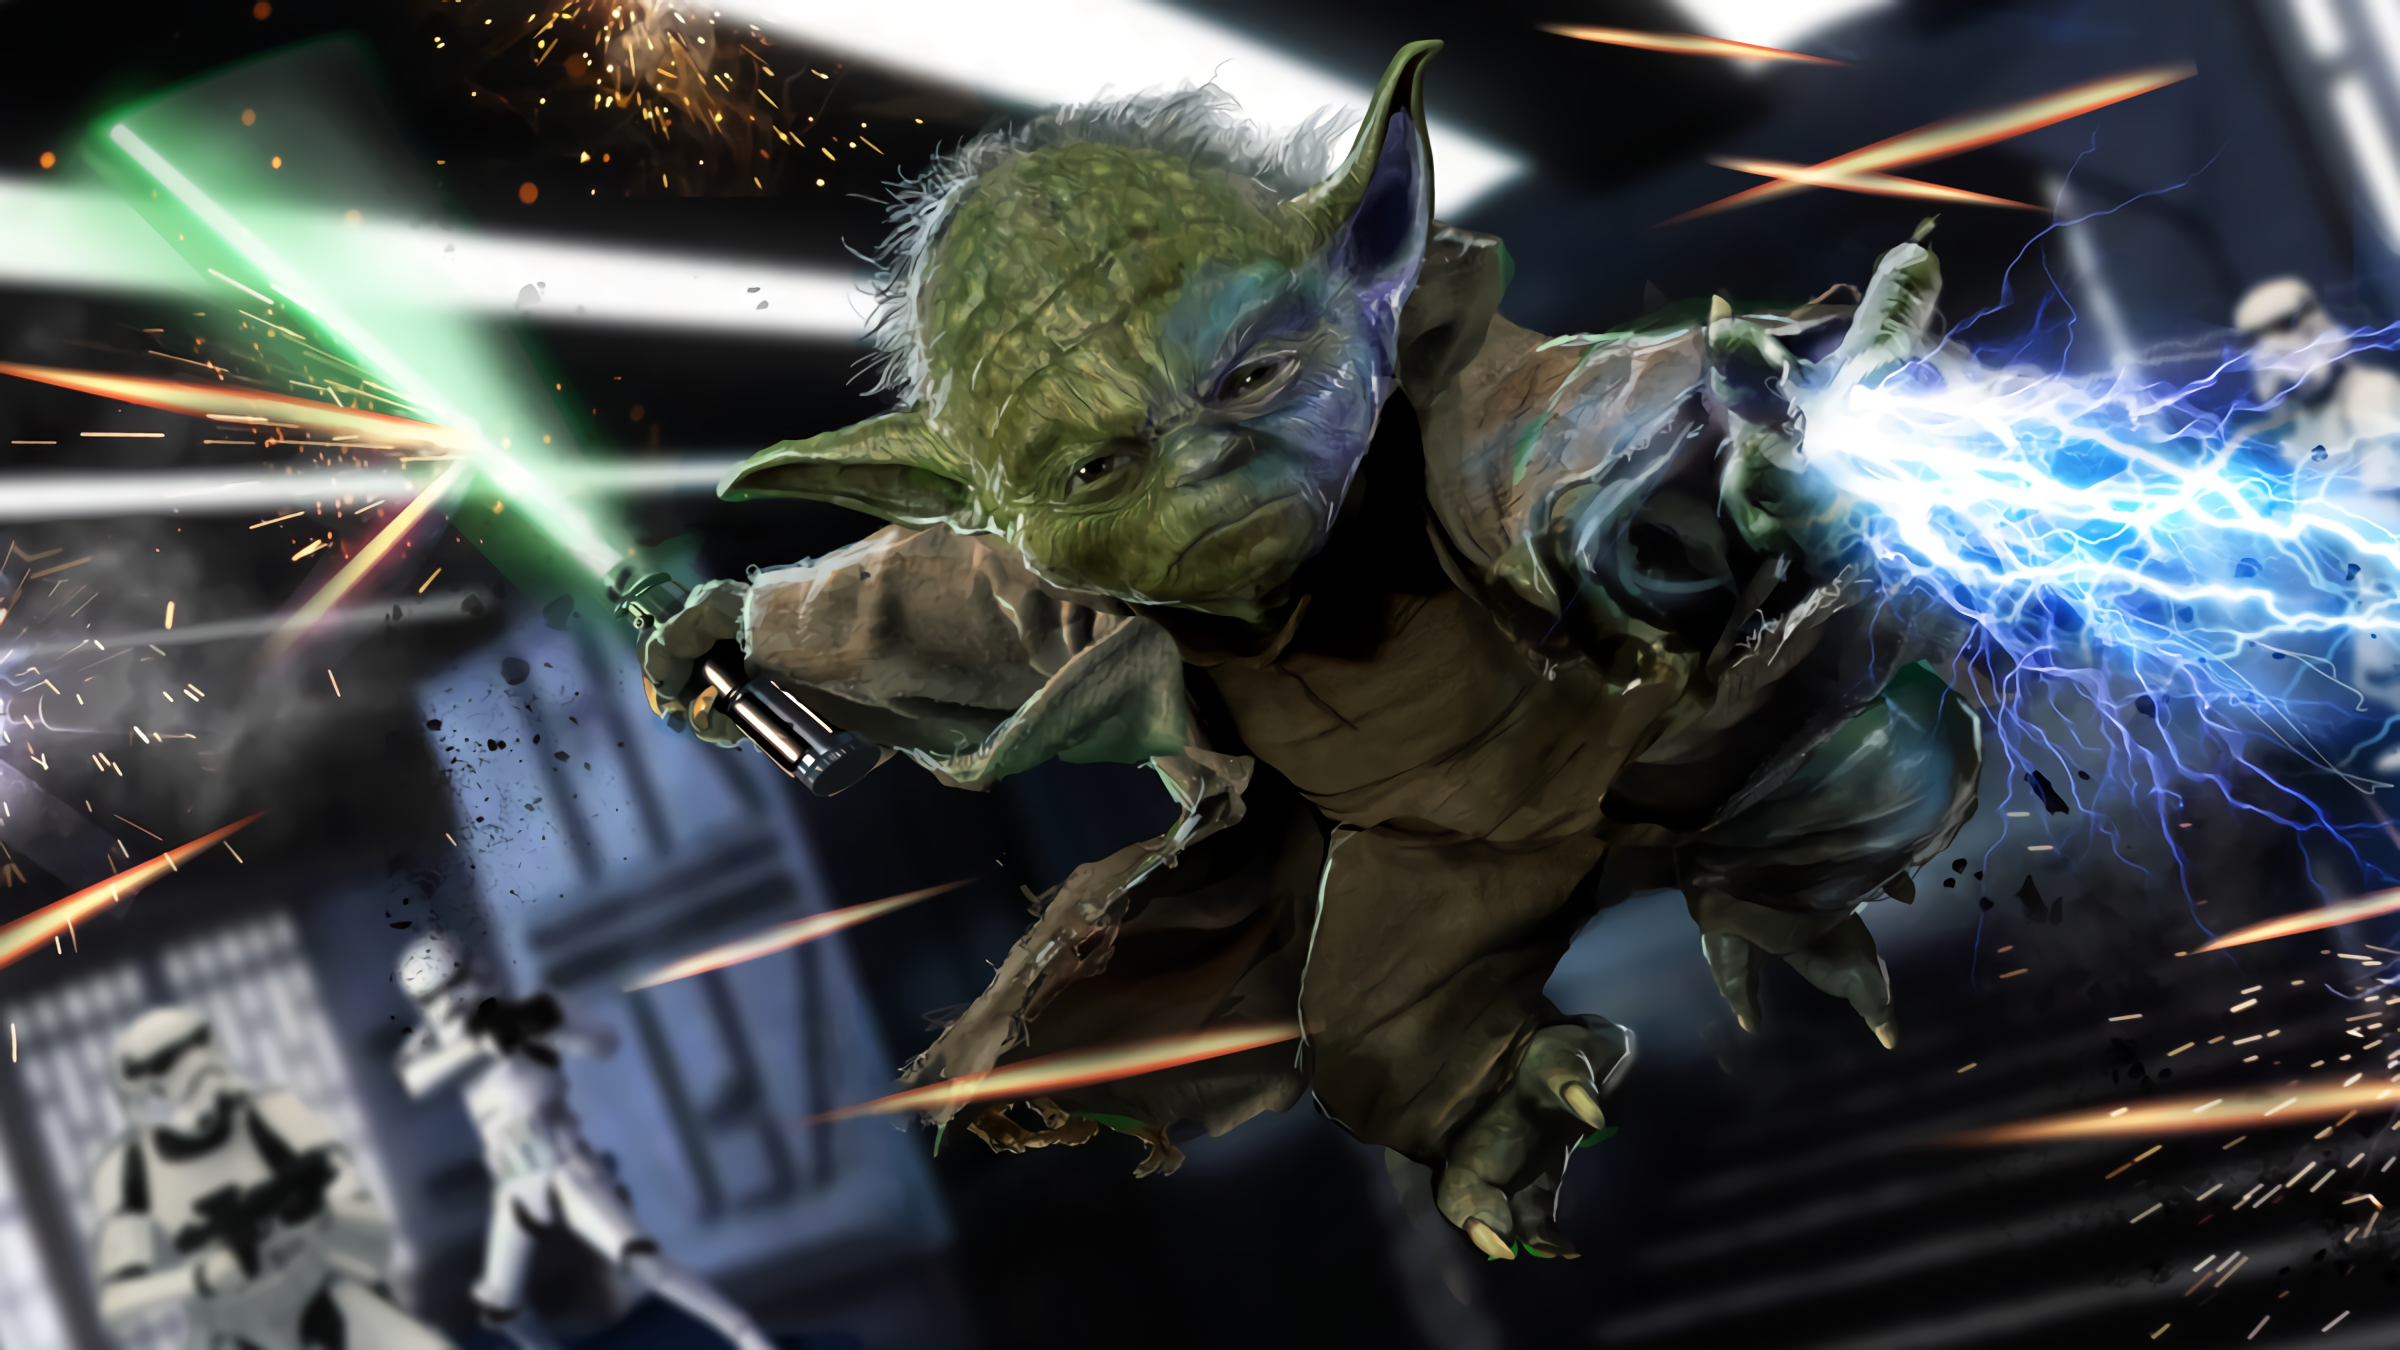 Yoda Star Wars Jedi Lightsaber Green Lightsaber Lightning 2400x1350